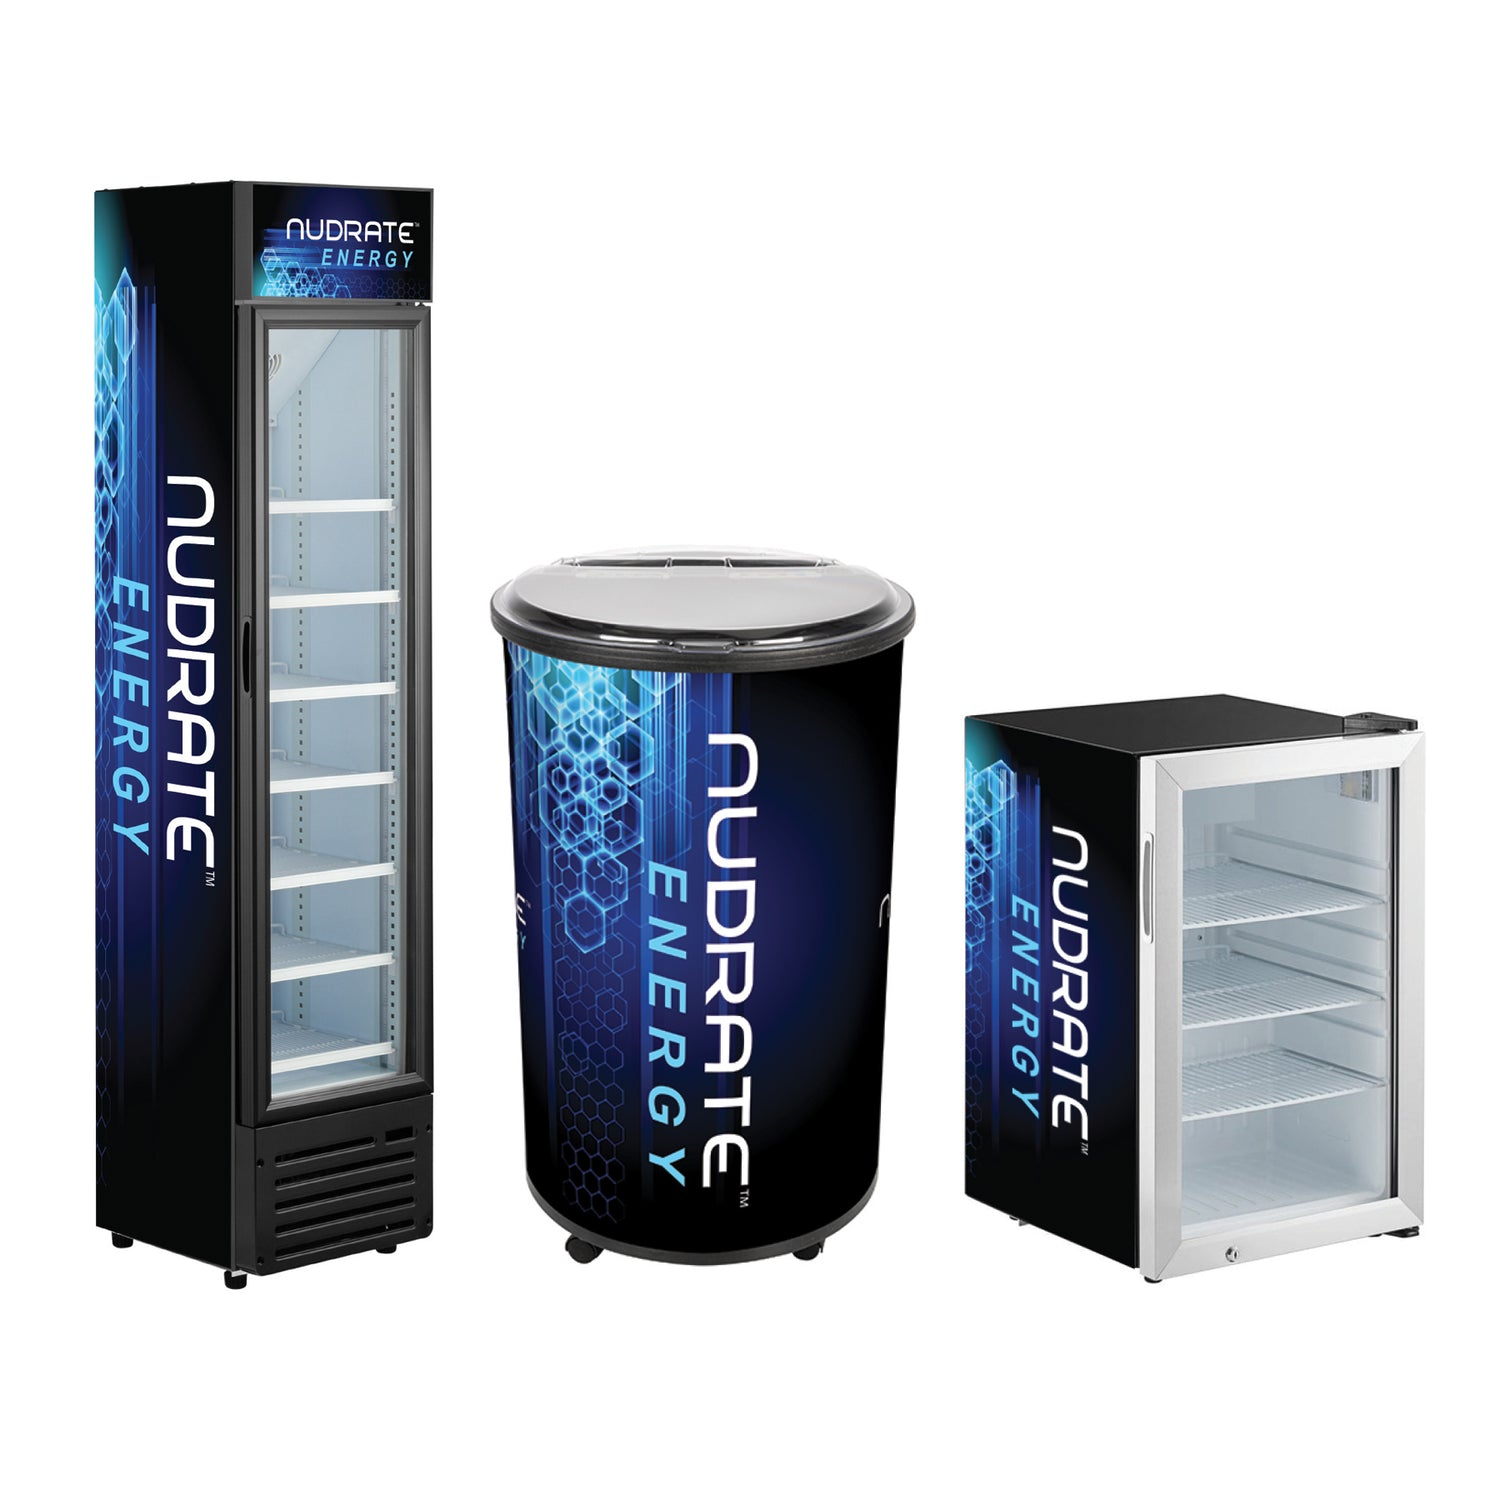 Nudrate Energy Drink Refrigerators